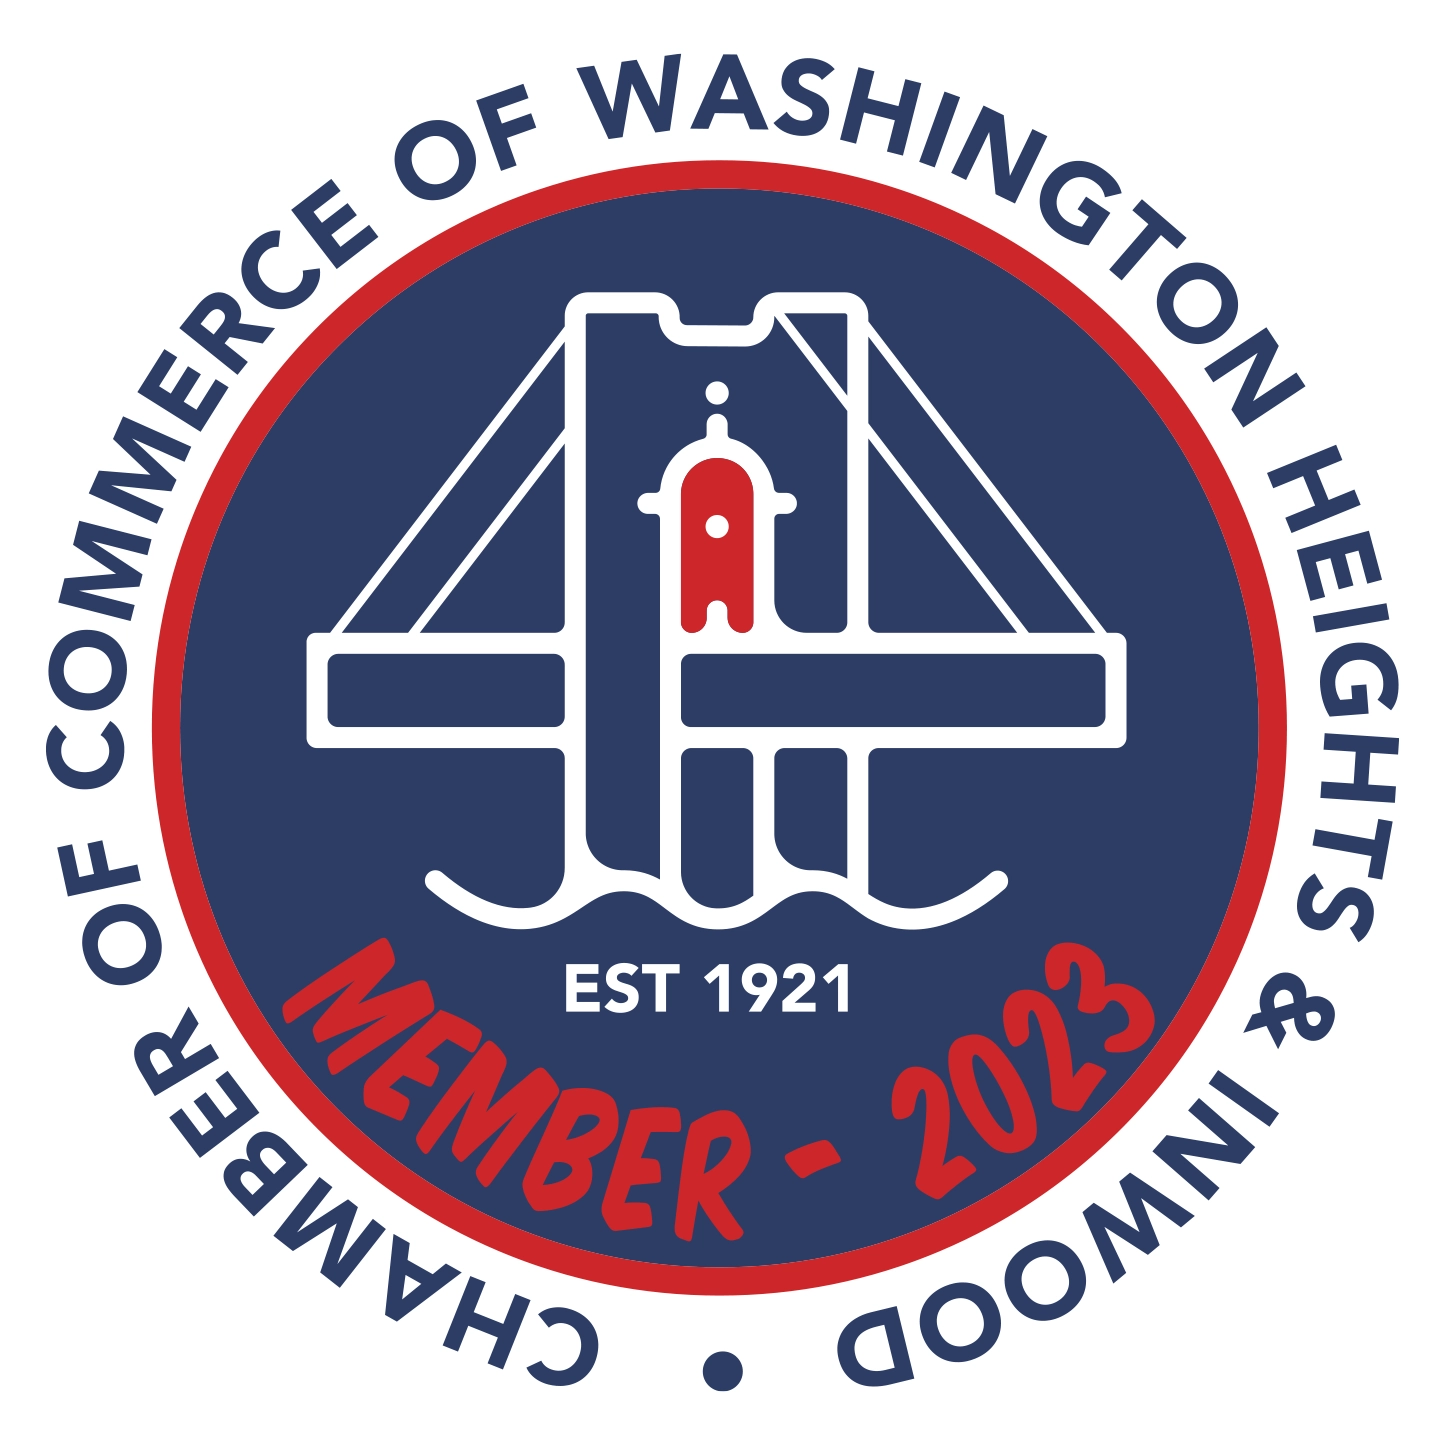 Chamber of Commerce of Washington Heights & Inwood certificate